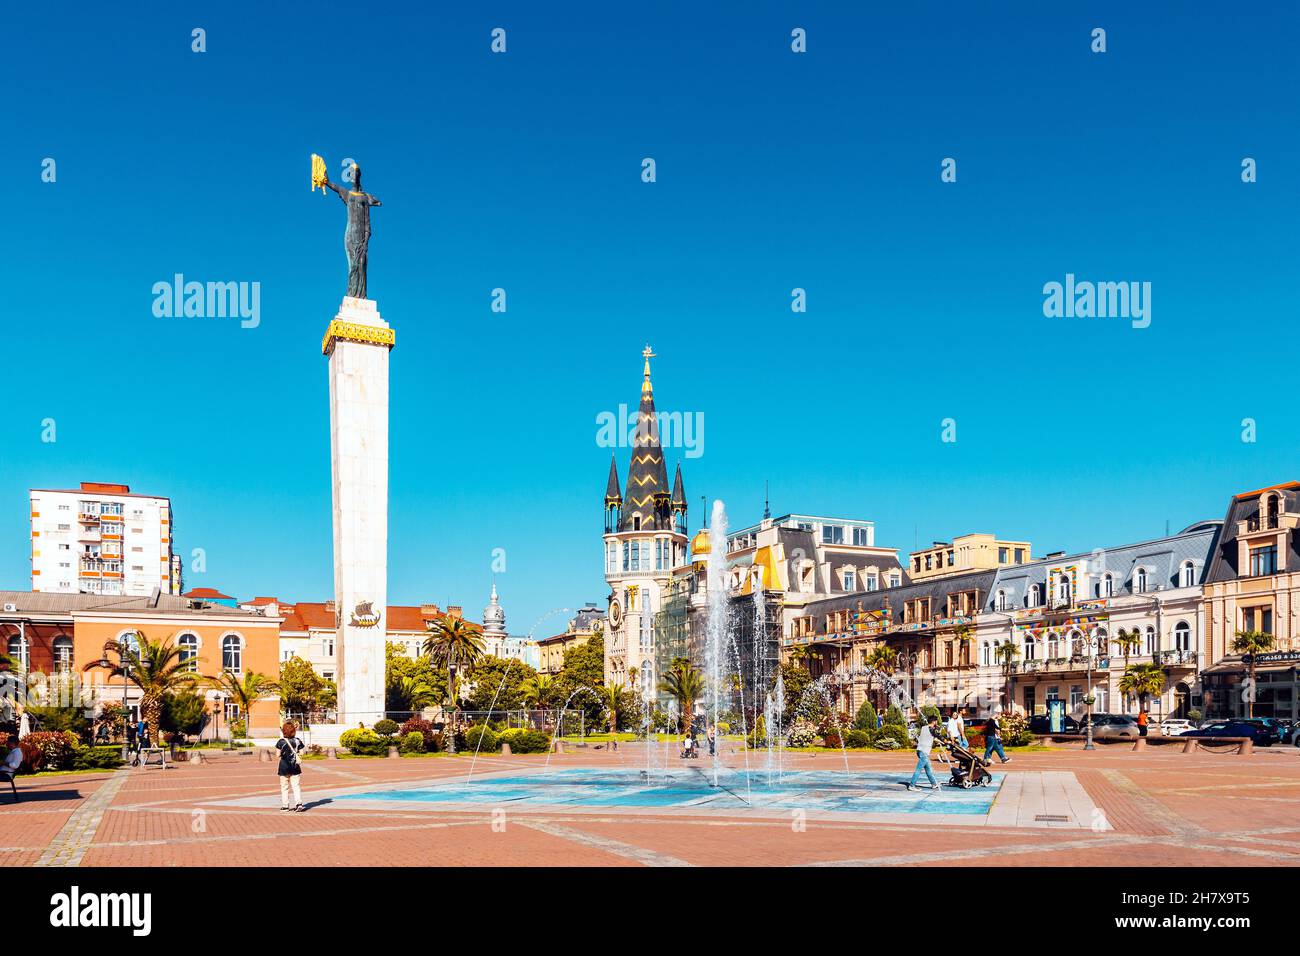 Batumi, Georgia - May 03, 2021 - Medea Square with a fountain and astronomical clock. Stock Photo